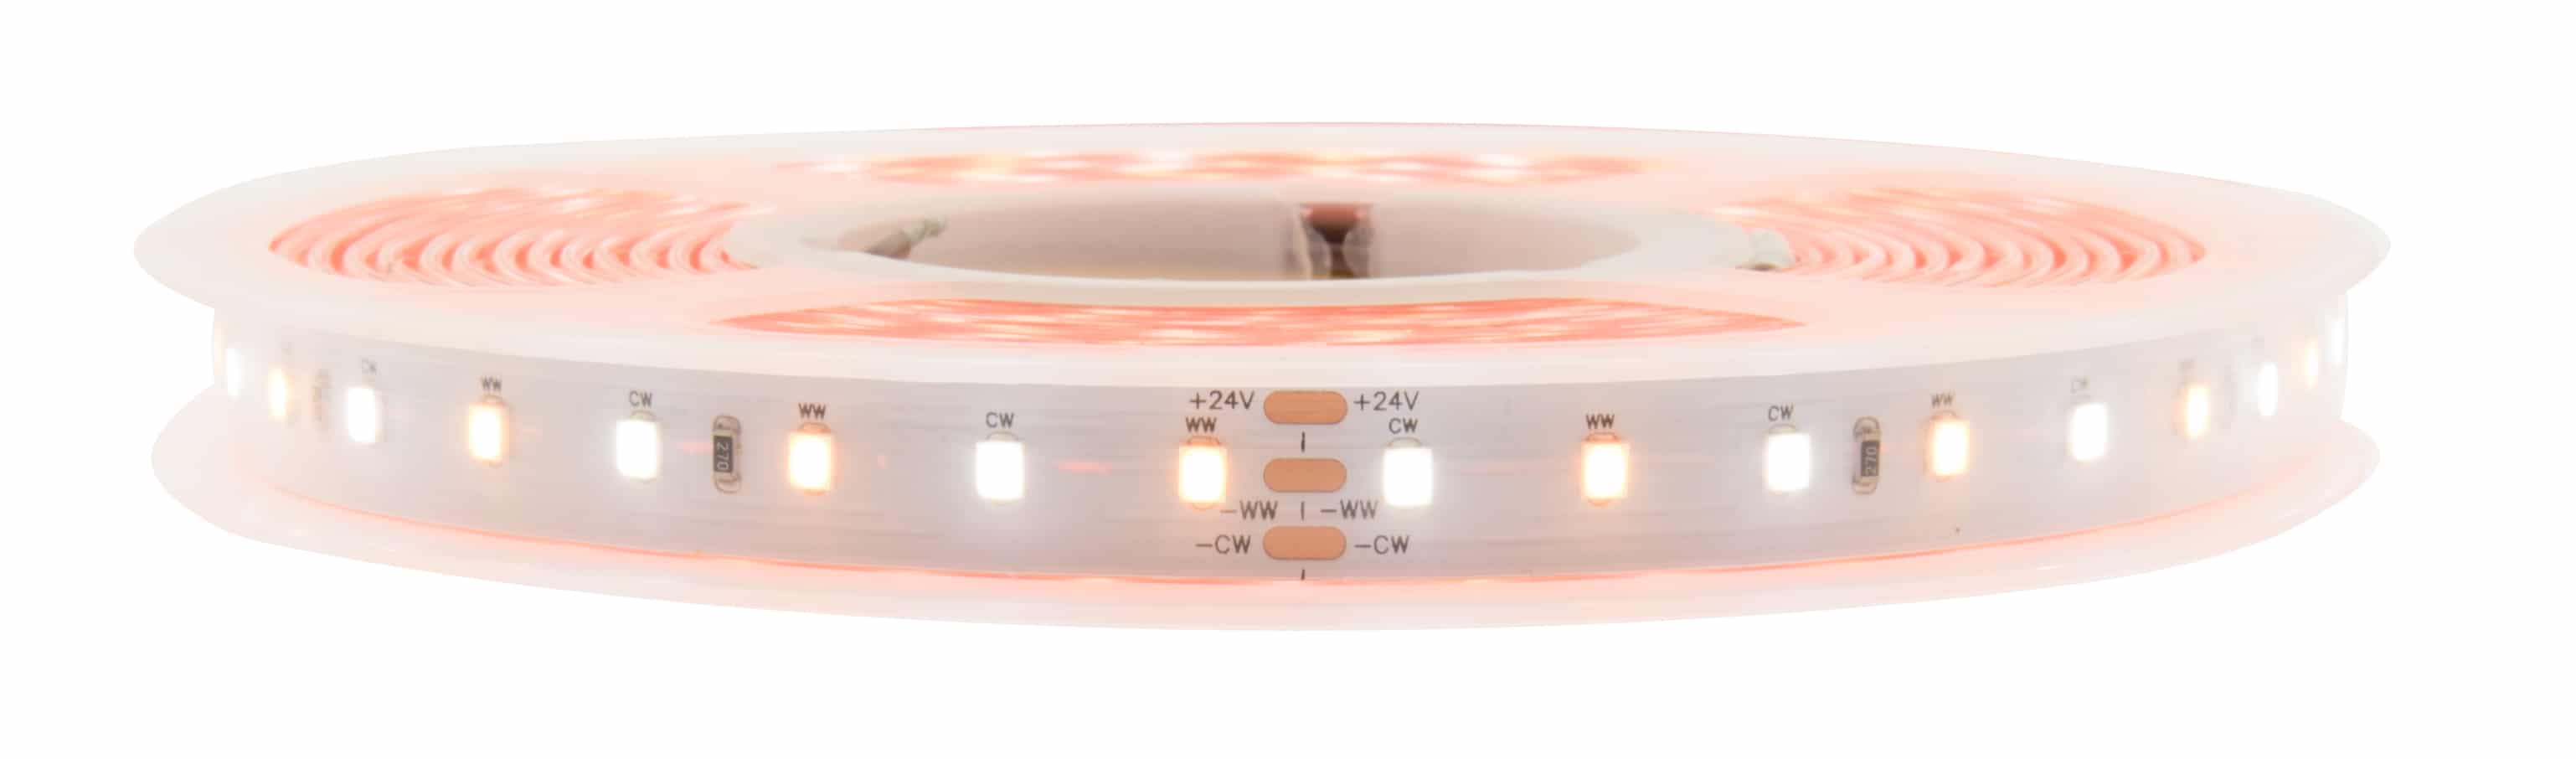 LED Flexstrip 86 AW (Ambiente White) - IP44 - Indoor | CRI/RA 90+